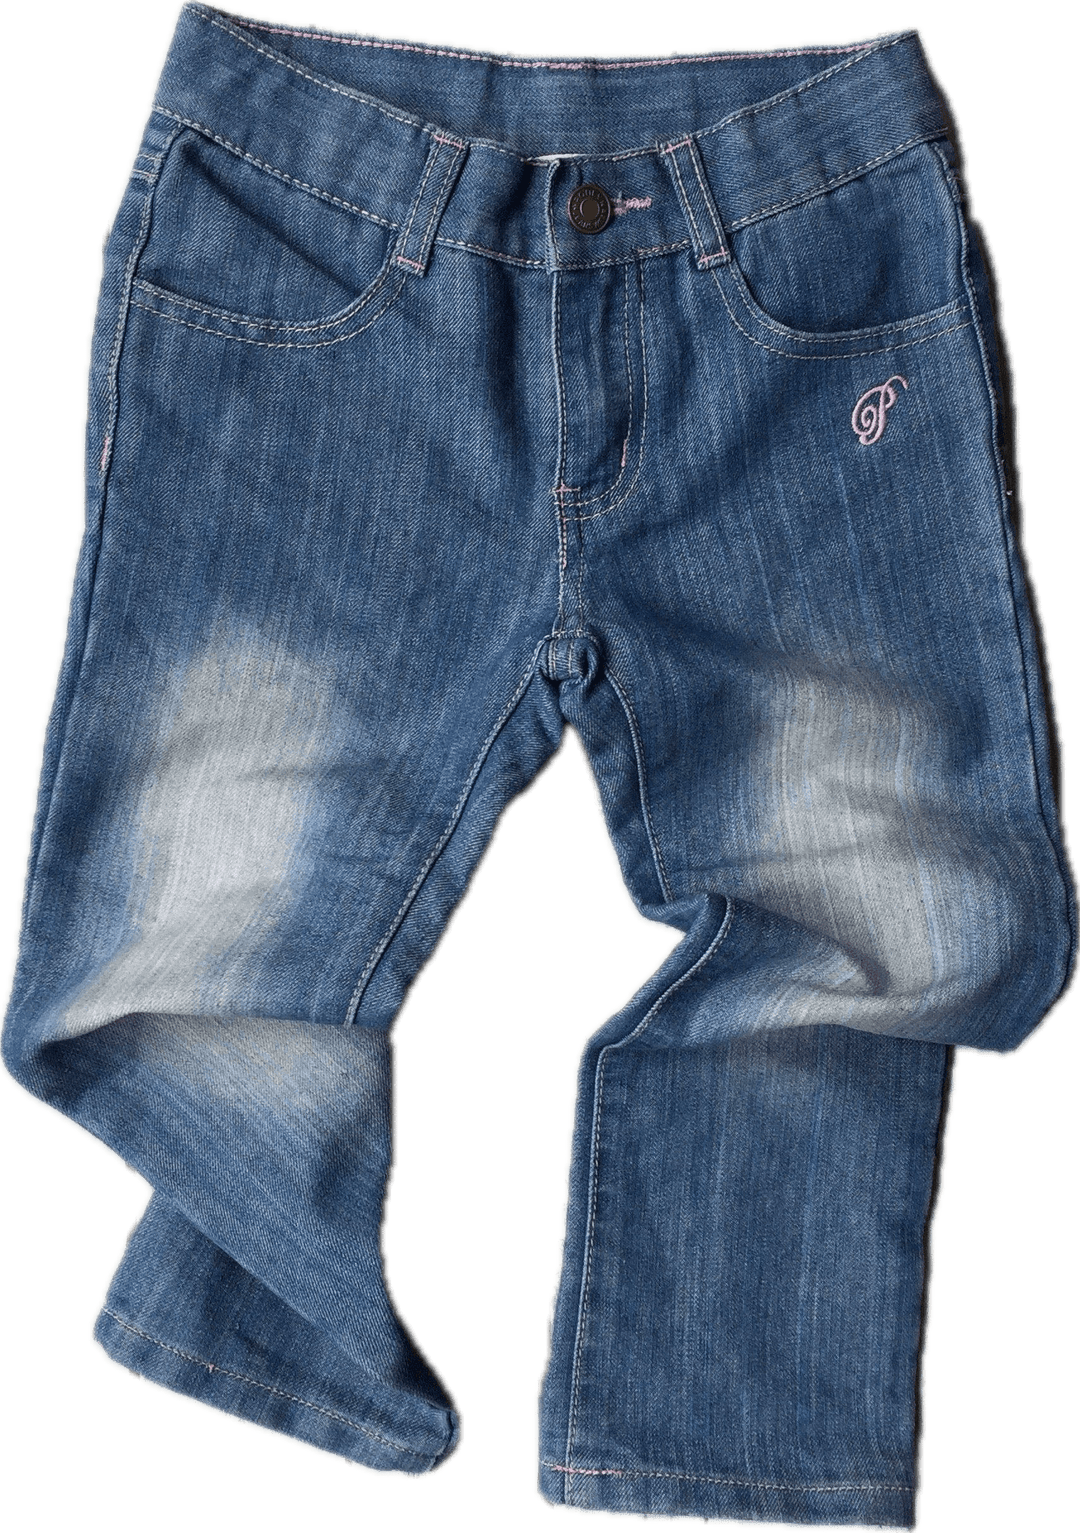 Poney Girls Jeans - Size 5/6 - Jean Pool